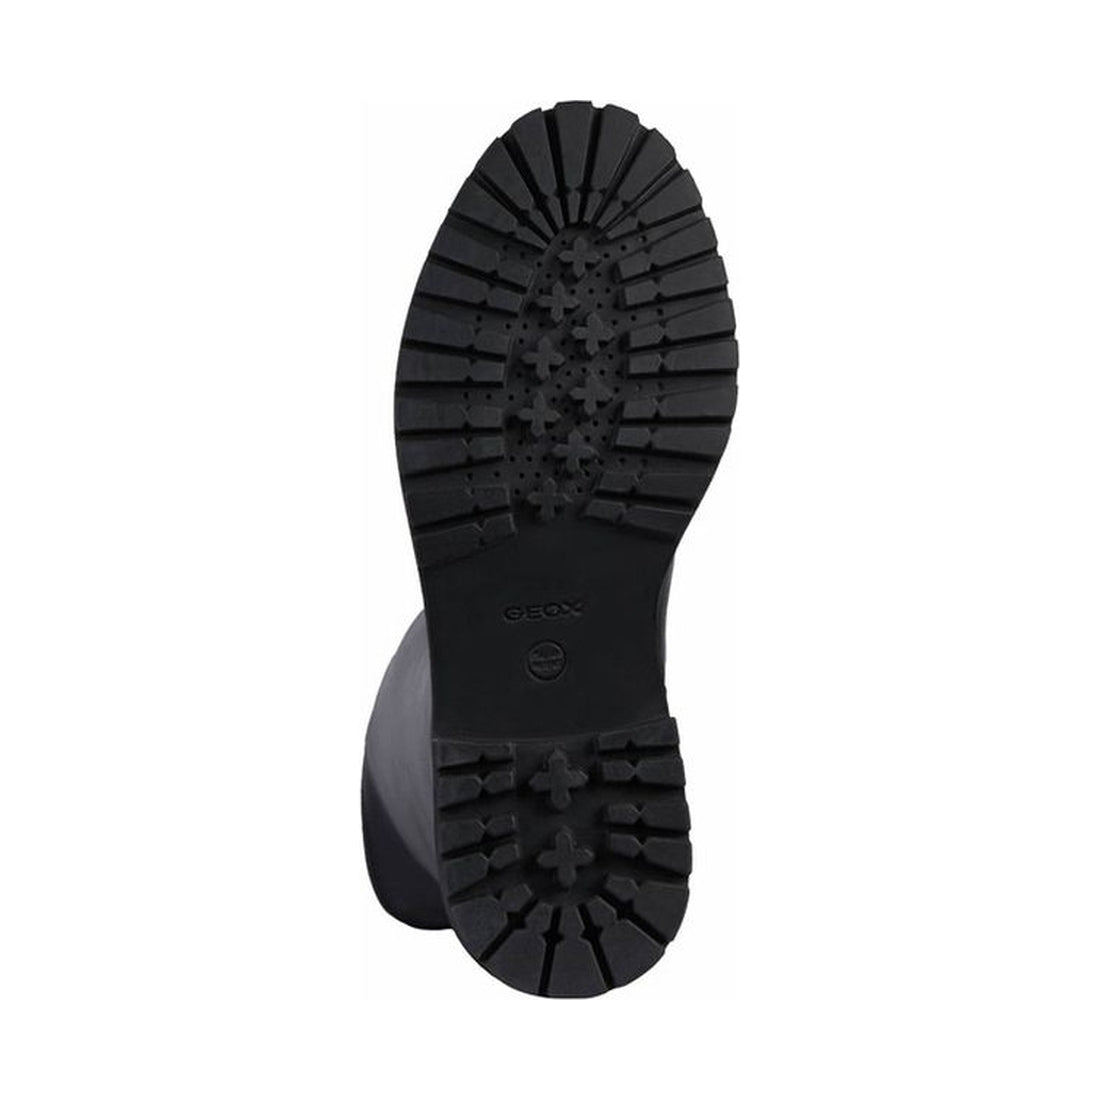 Geox womens black iridea boots | Vilbury London